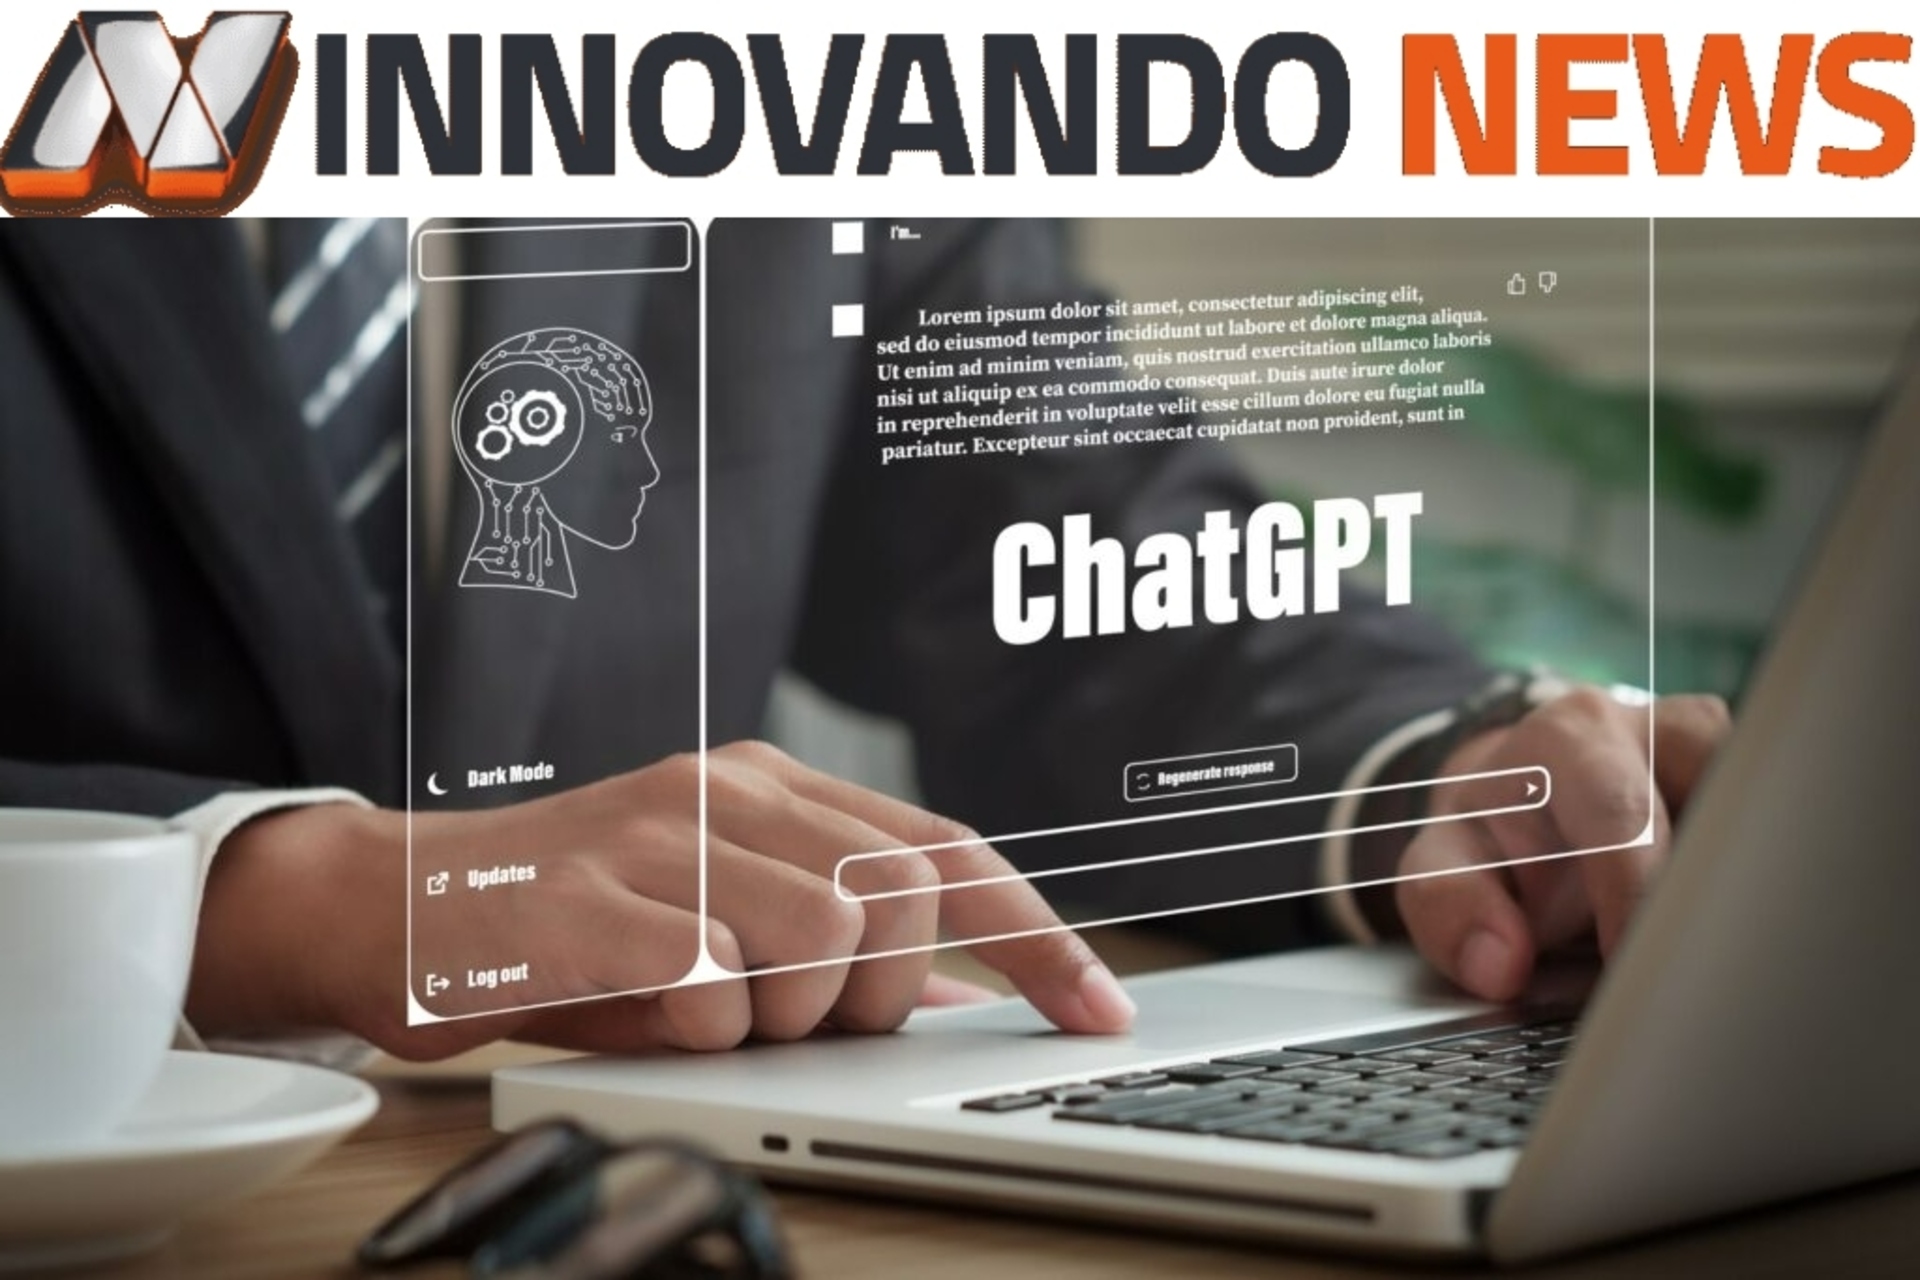 ChatGPT: ჩვენ ვესაუბრეთ OpenAI-ს ChatGPT-ს და ვთხოვეთ, გვეთქვა Innovando.News-ის შესახებ და ჟურნალისტიკასა და კომუნიკაციას შორის ურთიერთობაზე.